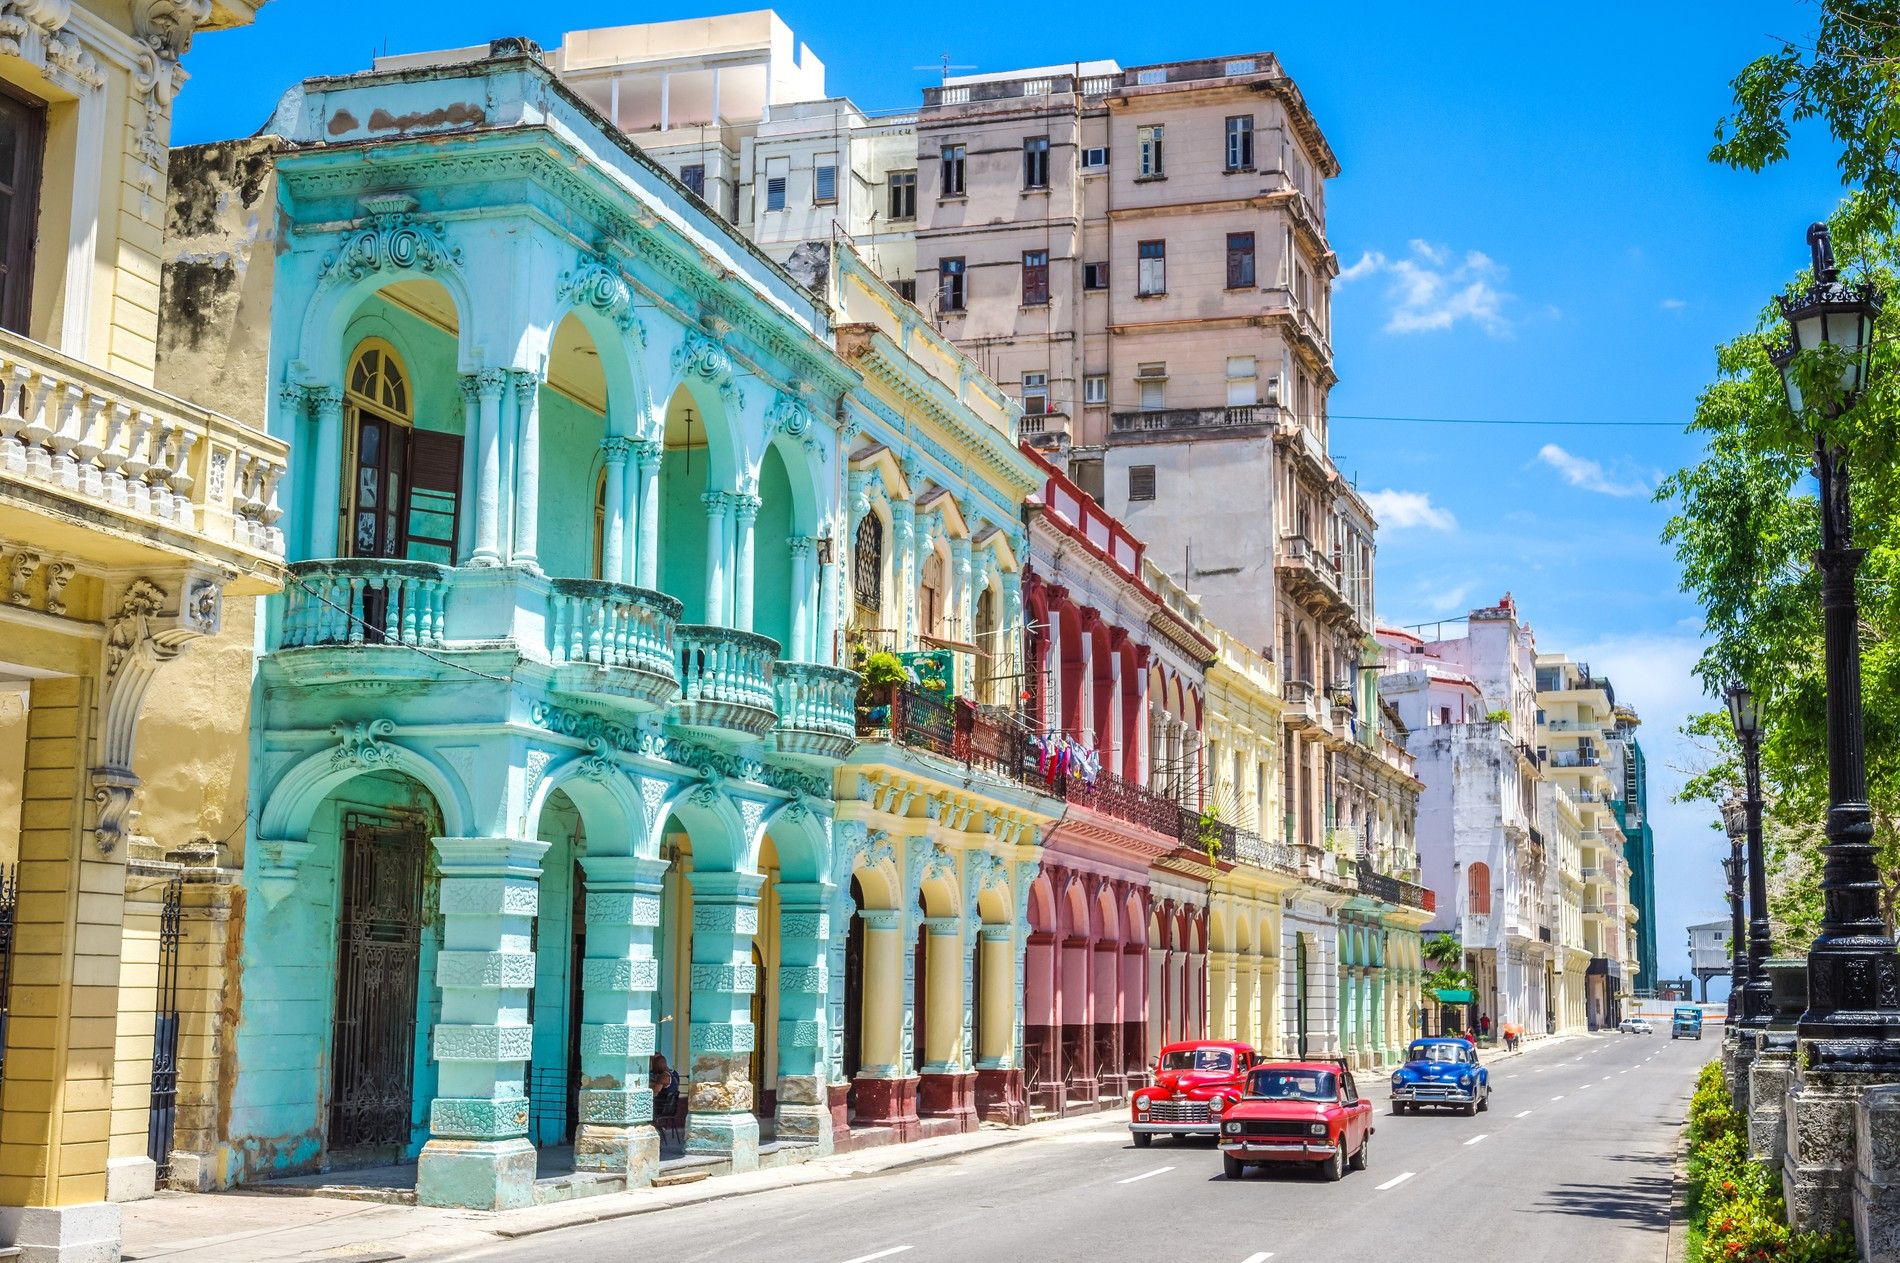 Гавана, Куба
Фото: Getty Images